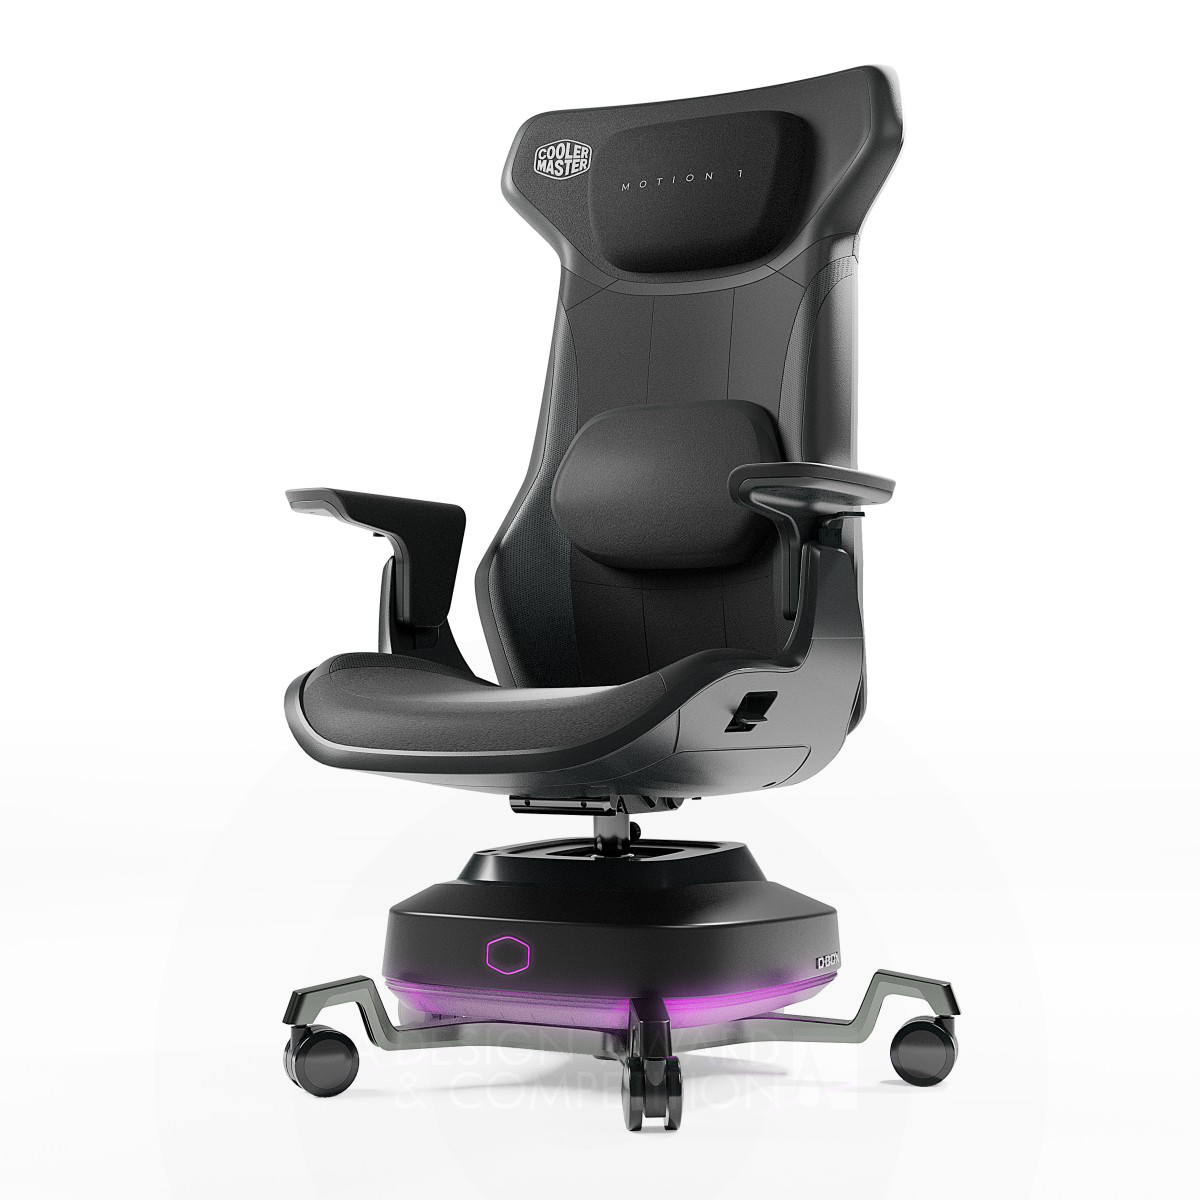 Motion 1  <b>Haptic Gaming Chair